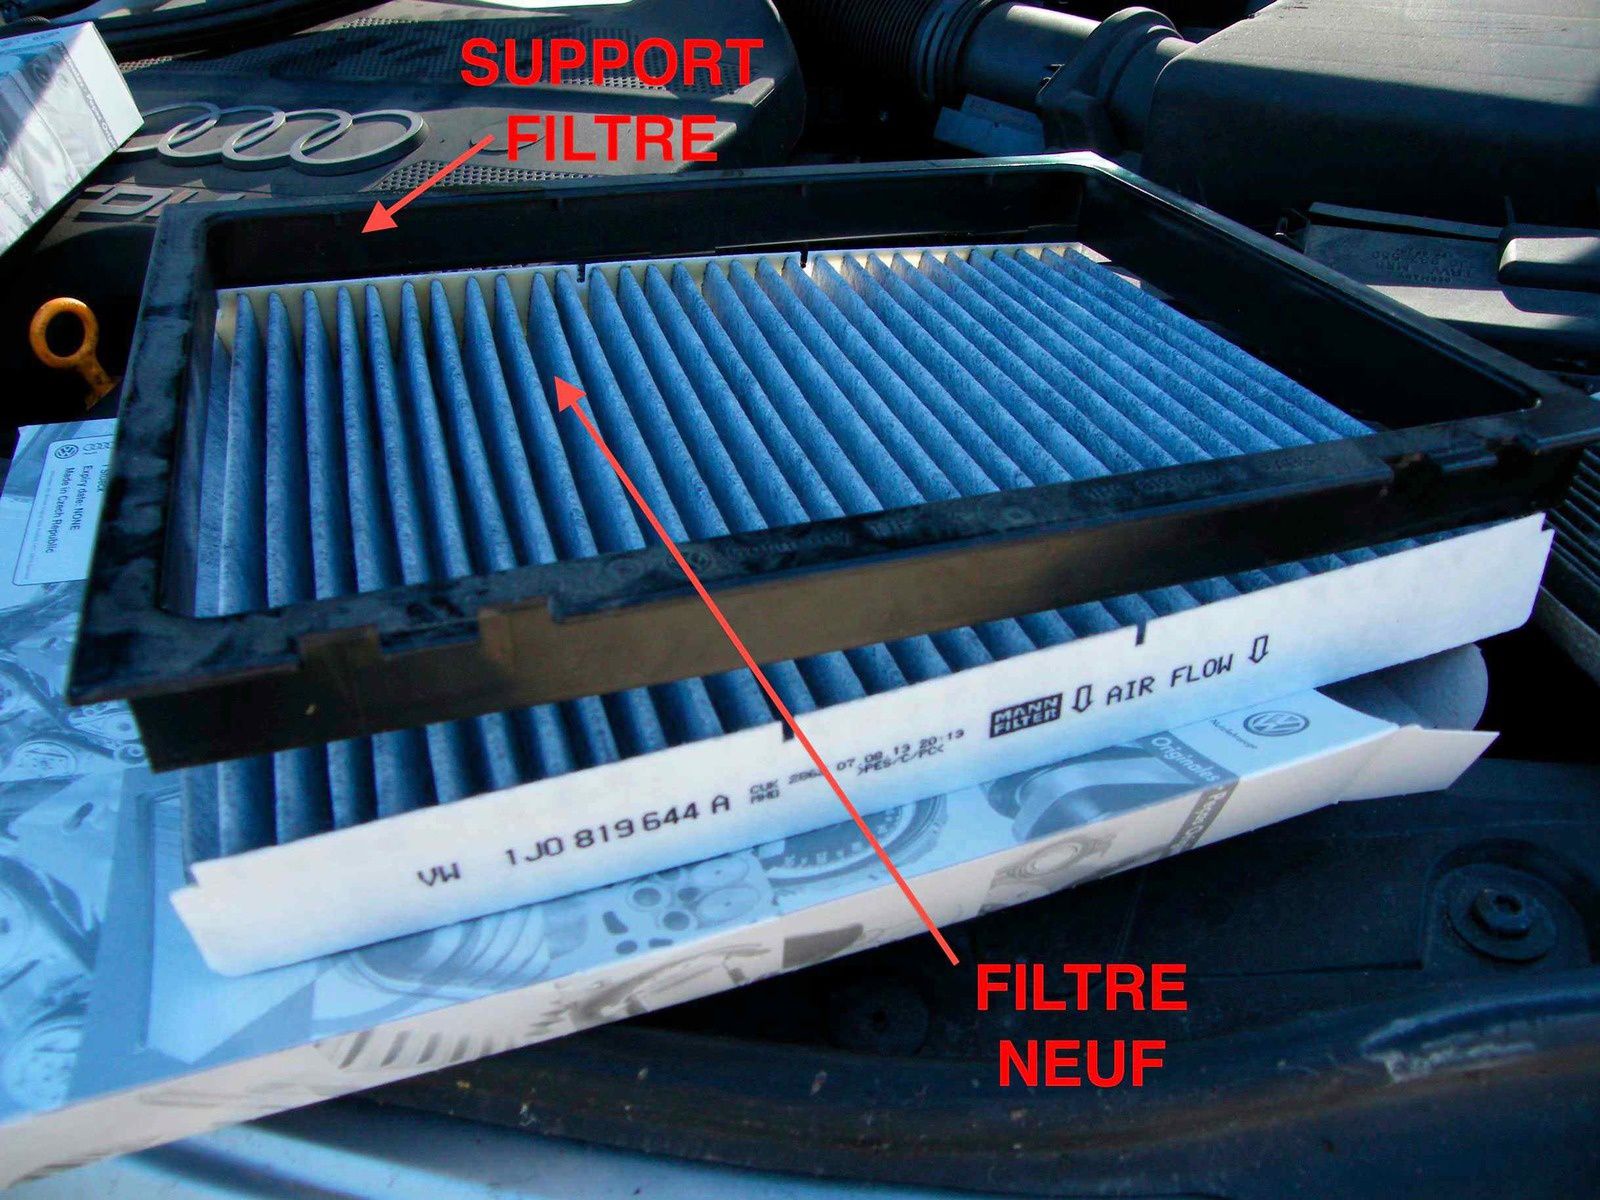 Changement filtre d'habitacle Audi A3 8L - tutorialaudi